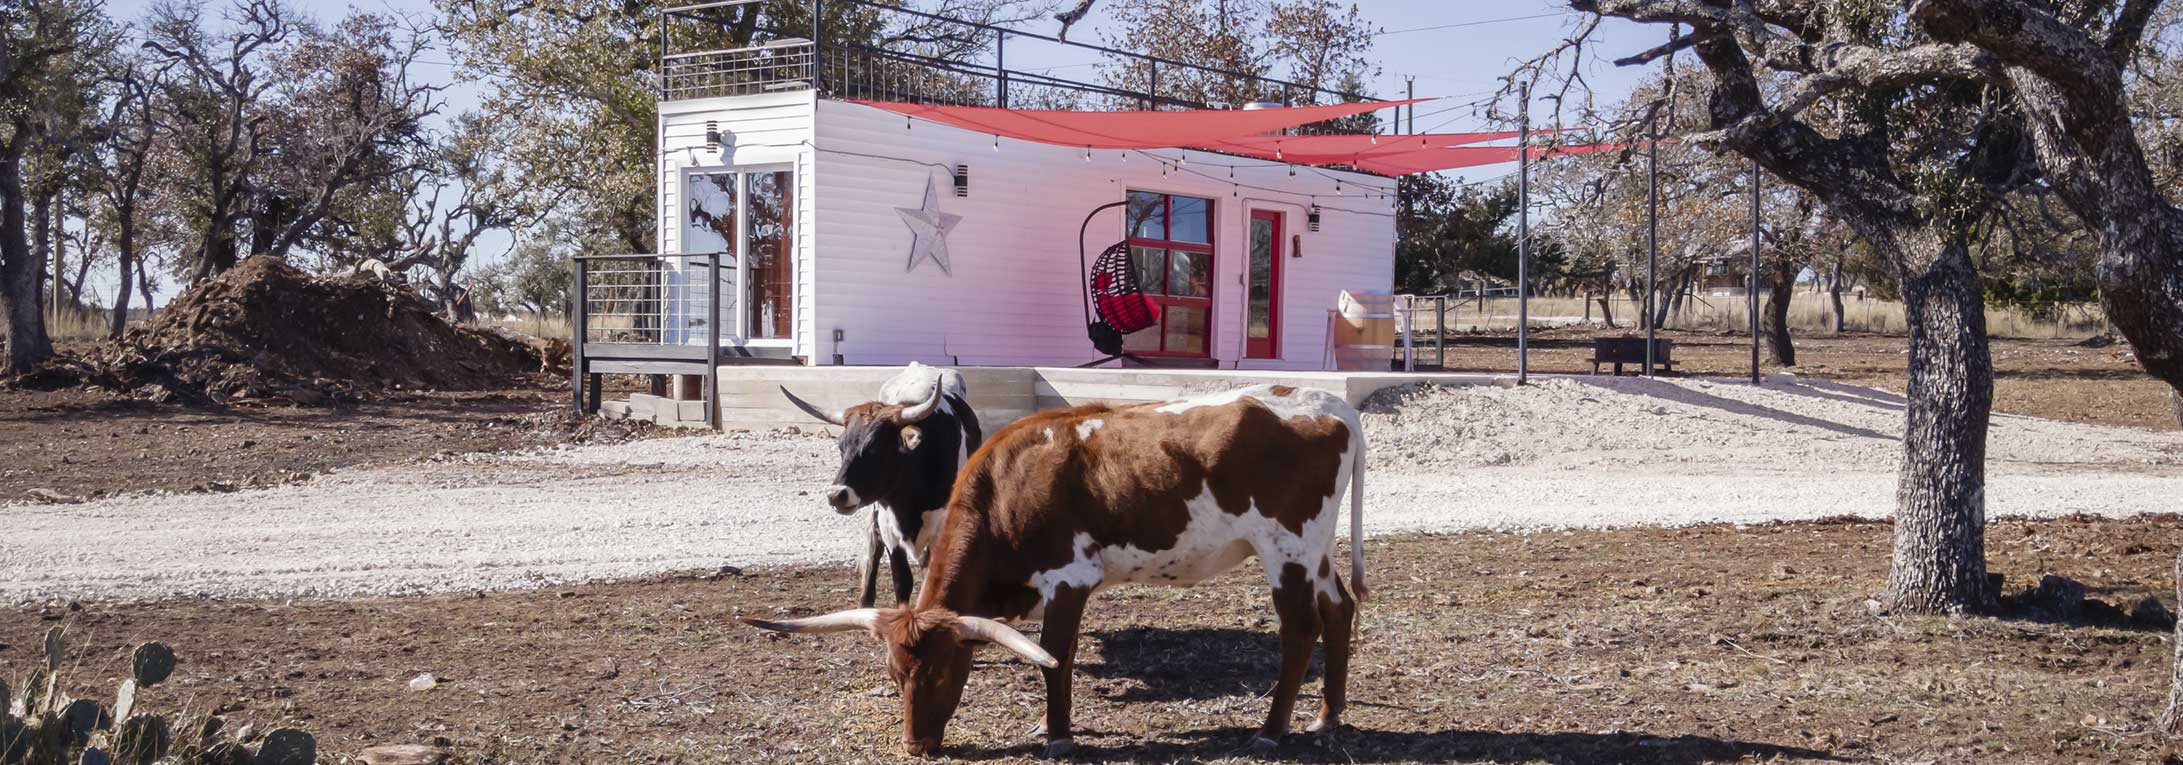 Best Airbnb bed and breakfast in Fredericksburg Texas